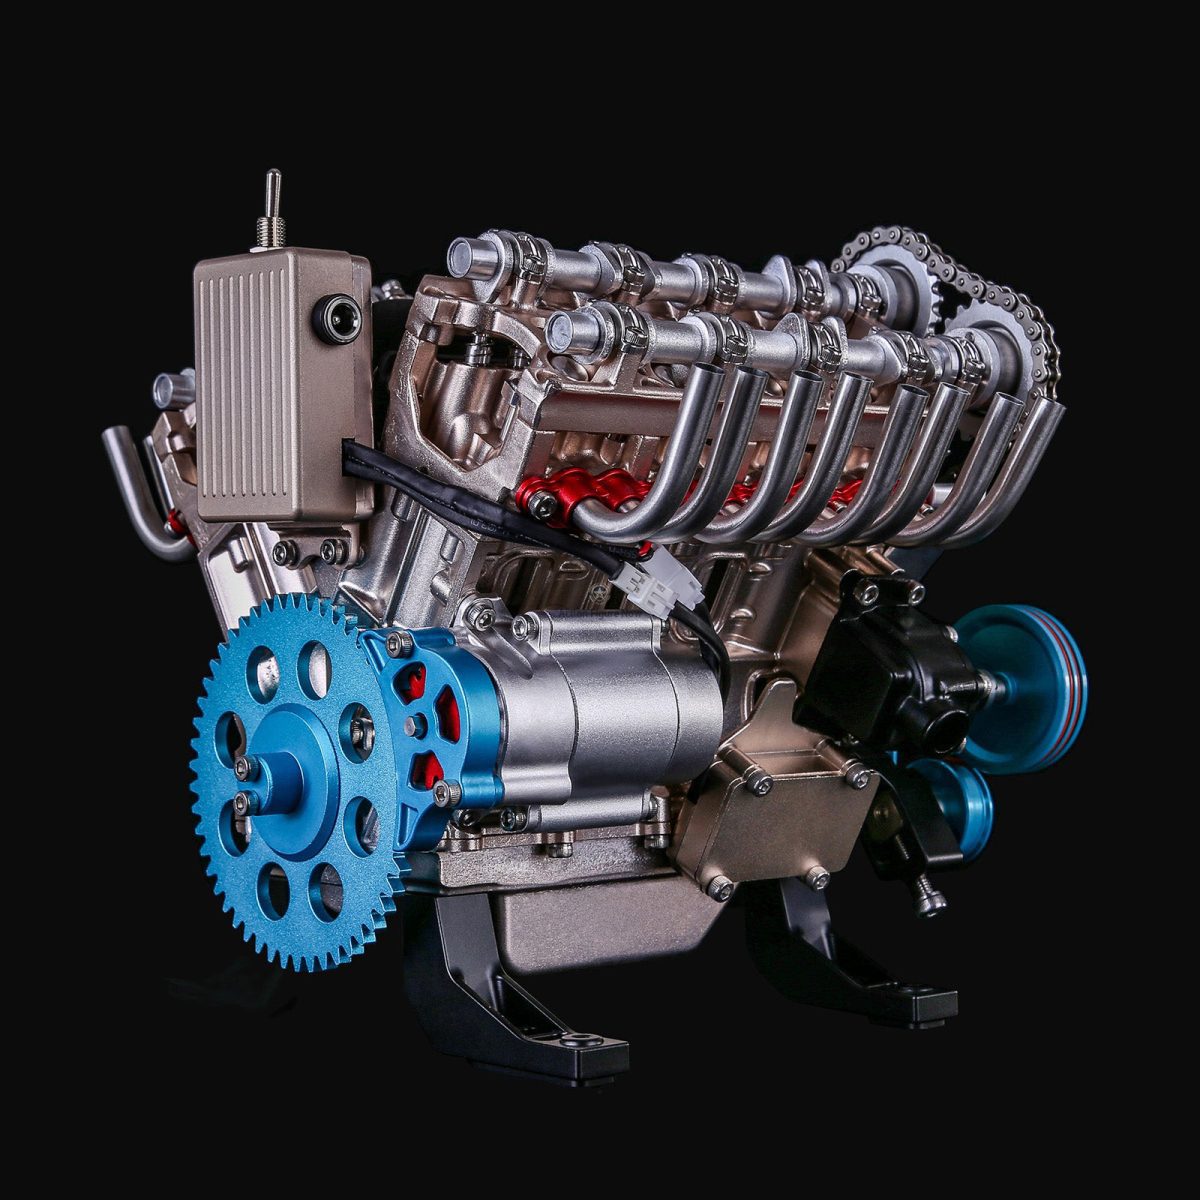 DIY Mechanical V8 Engine Metal Assembly Model Kit for Physics Toy STEM Science Experiment